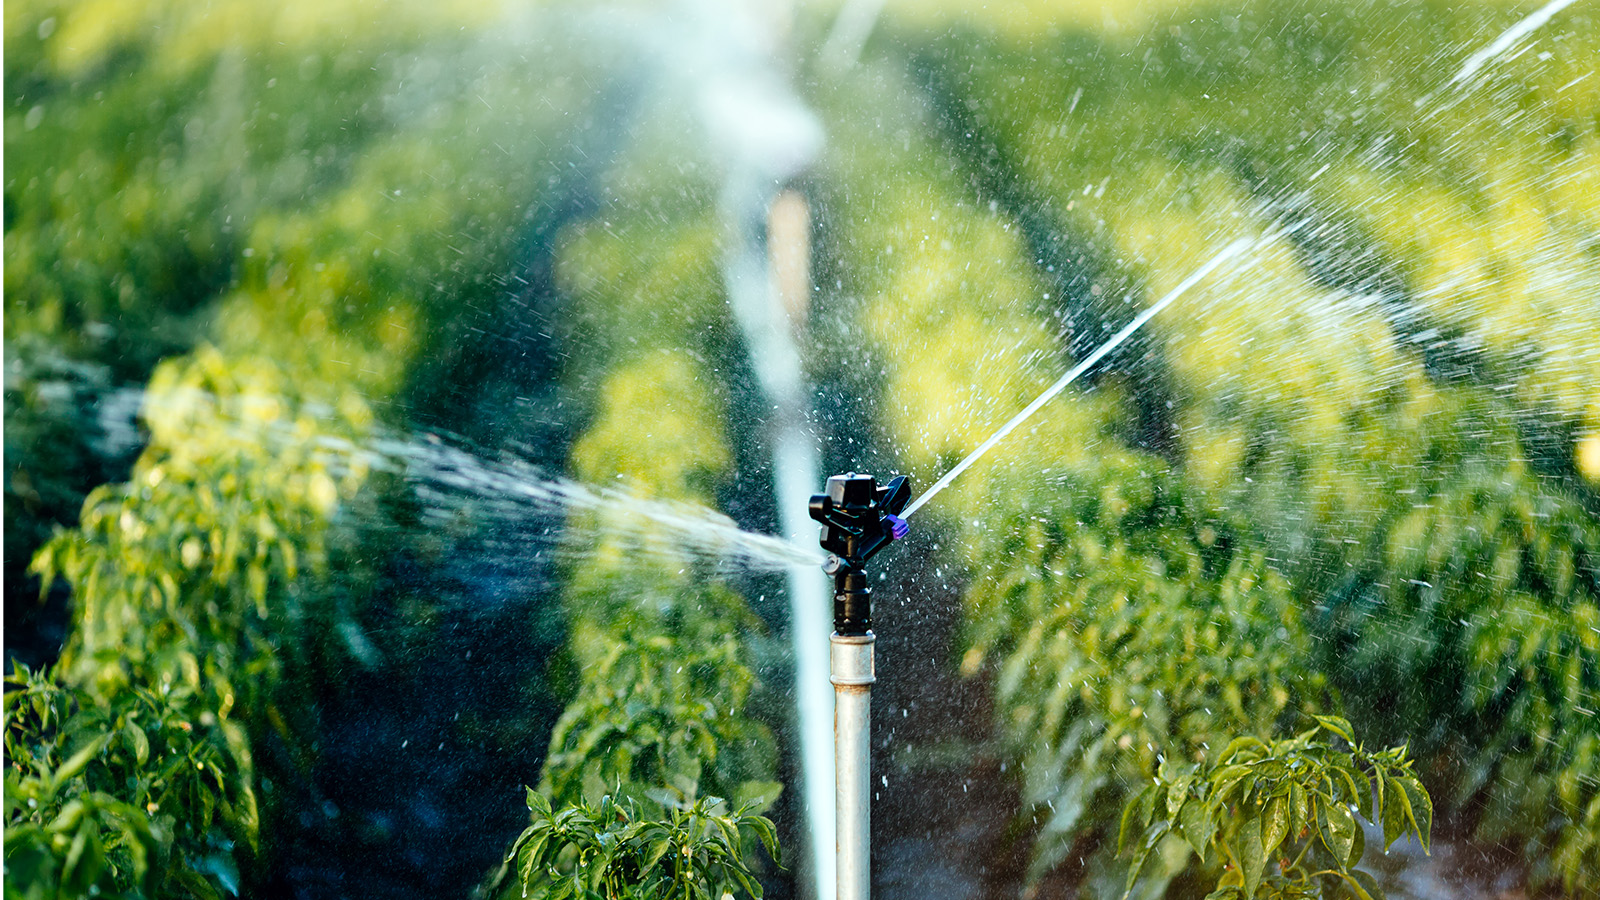 Sprinkler on farm produce